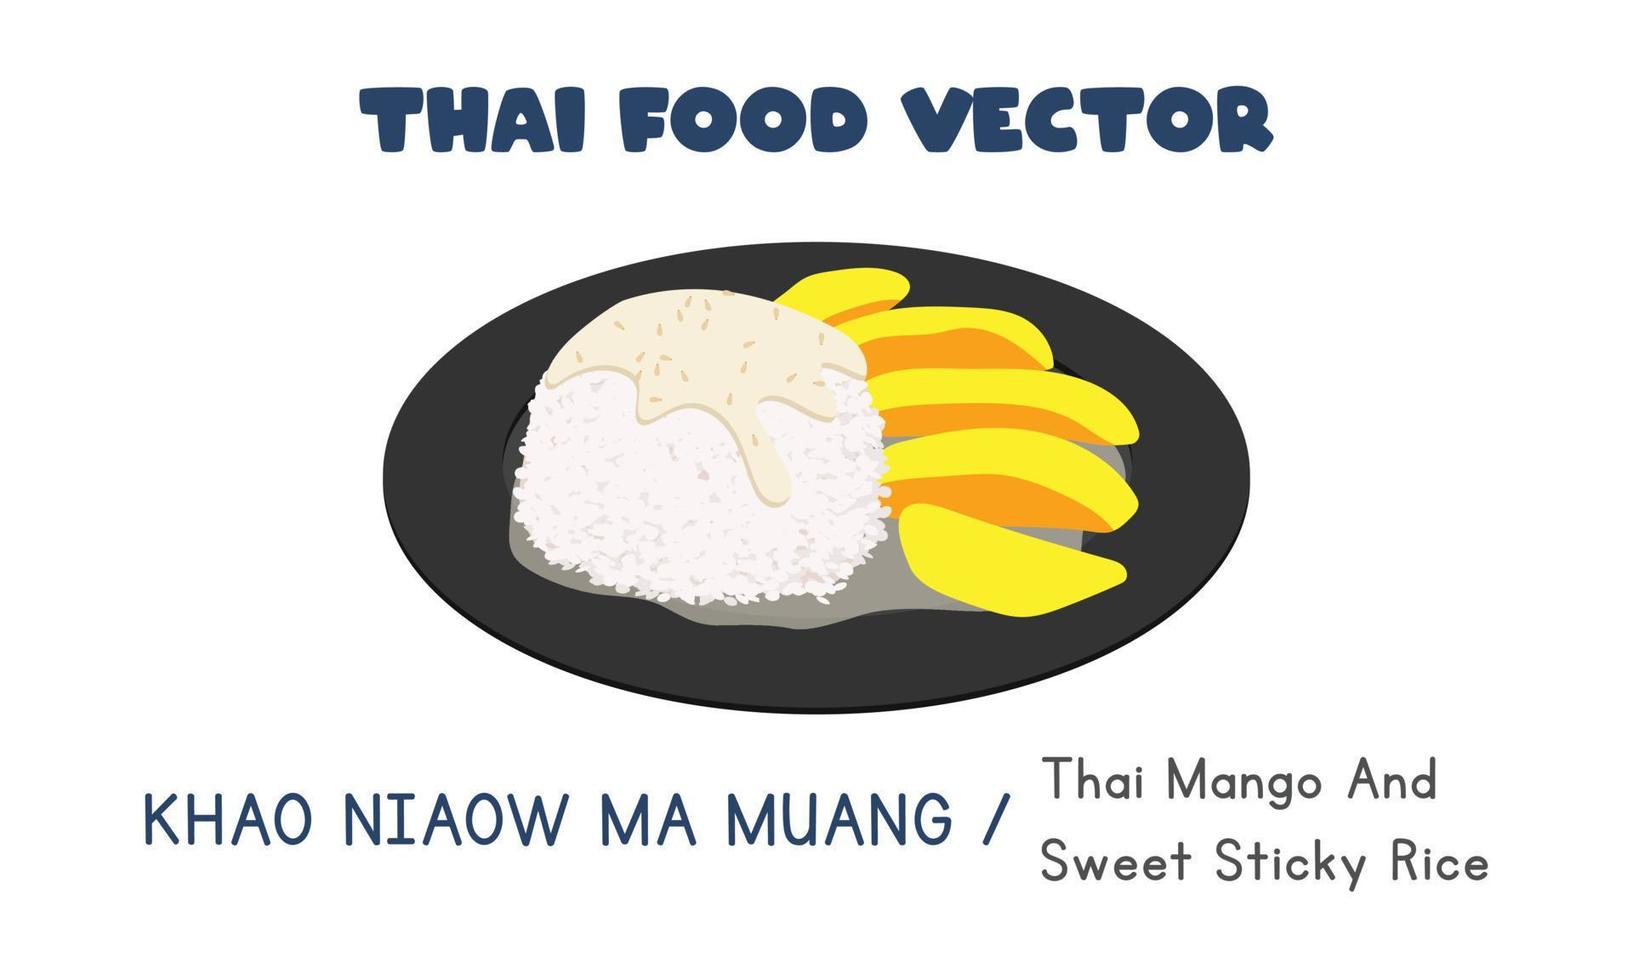 thai khao niaow ma muang - mango tailandés y arroz pegajoso dulce y leche de coco caricatura vectorial plana. comida asiática. cocina tailandesa. comida local tailandesa vector